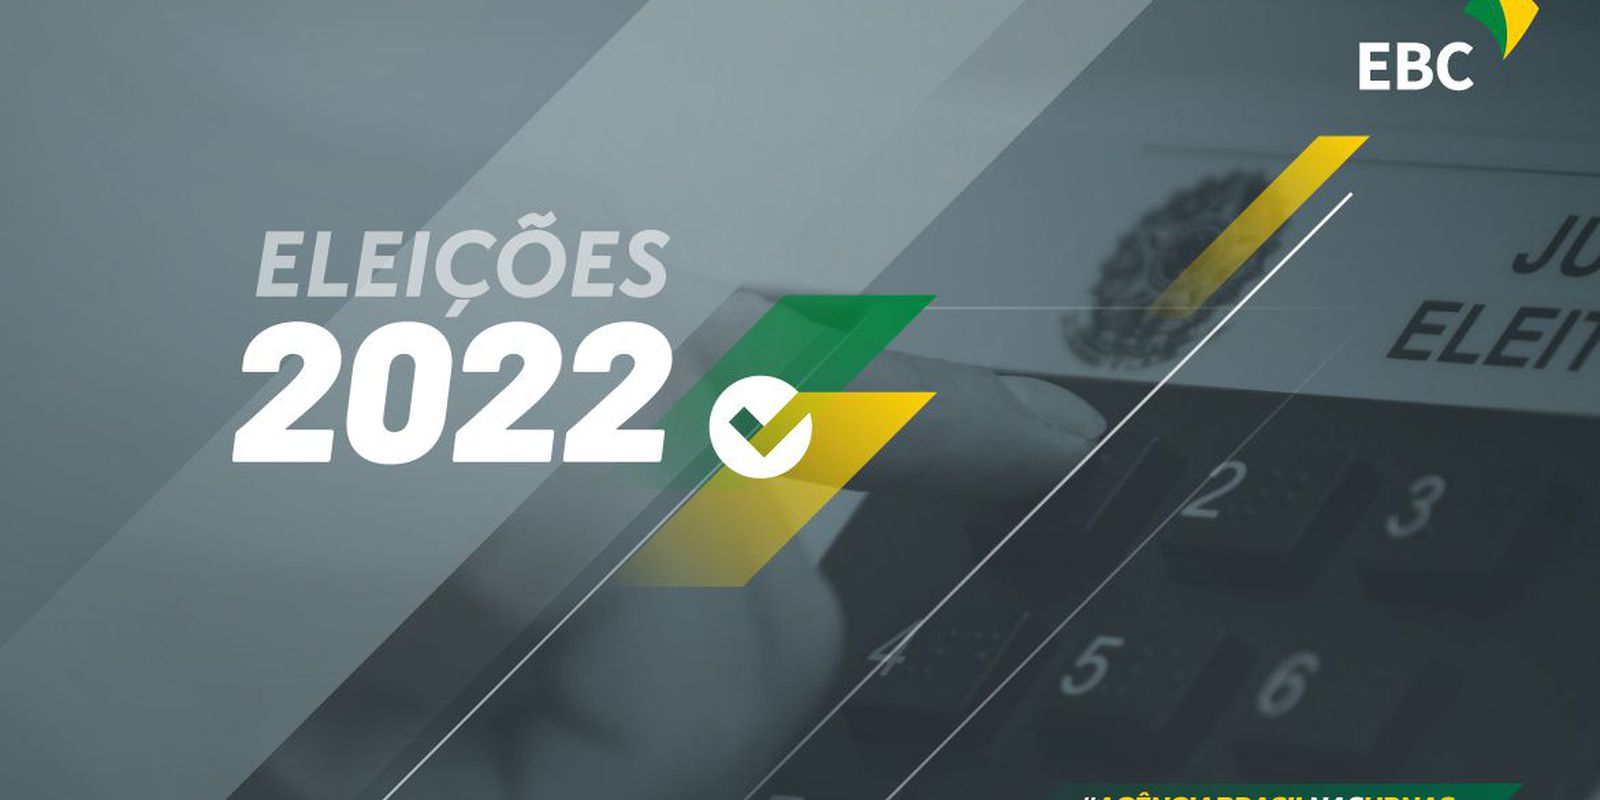 Alagoas: Paulo Dantas and Rodrigo Cunha will compete in the 2nd round